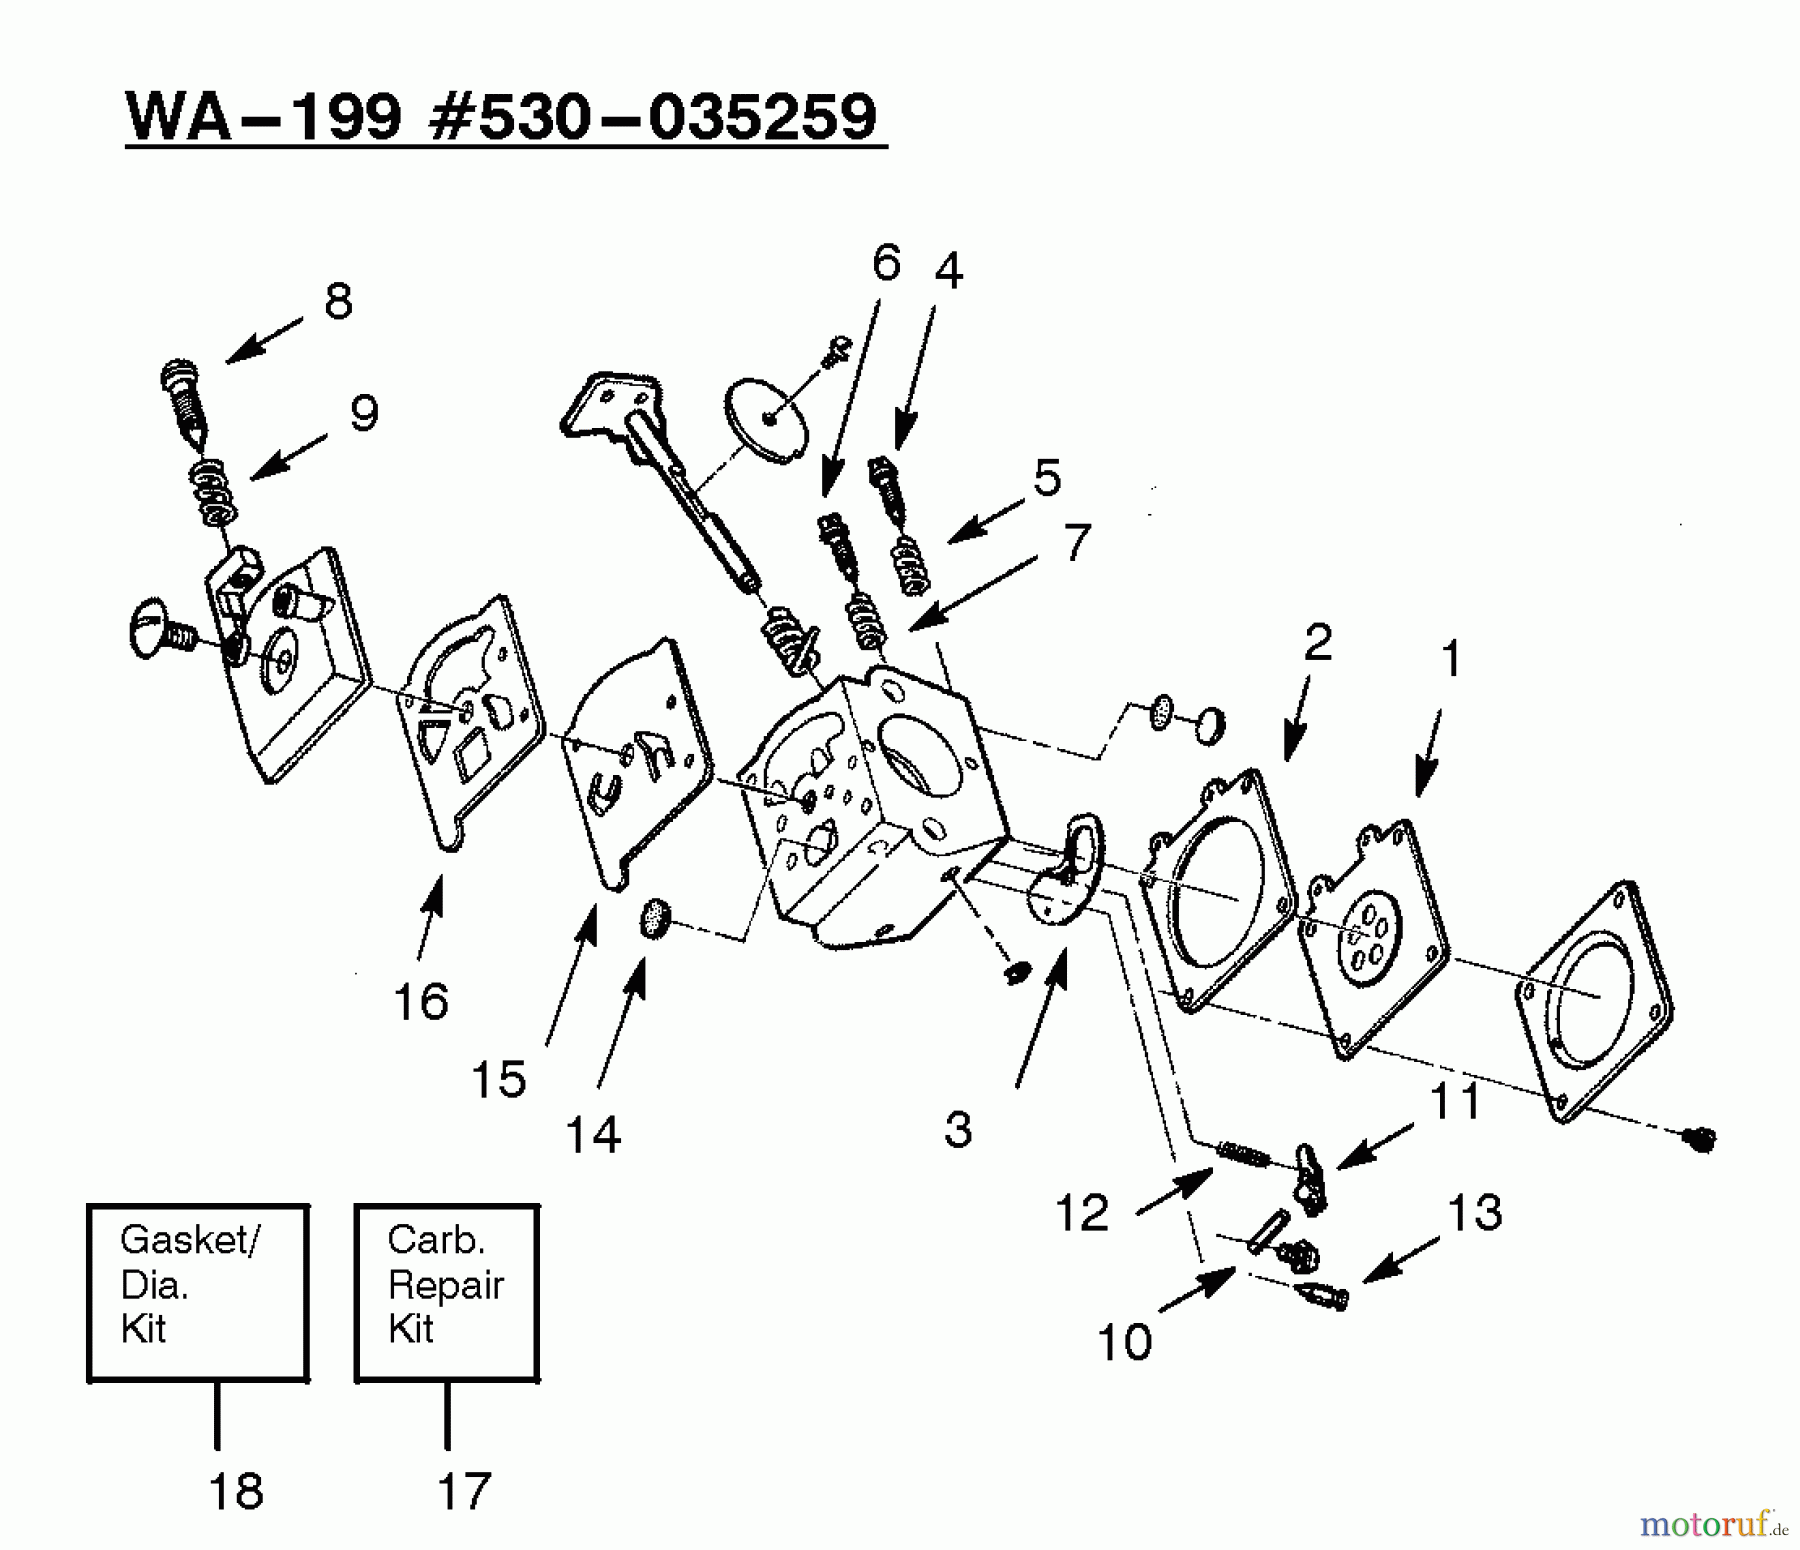  Poulan / Weed Eater Motorsensen, Trimmer XT50 - Weed Eater String Trimmer Carburetor Assembly WA-199